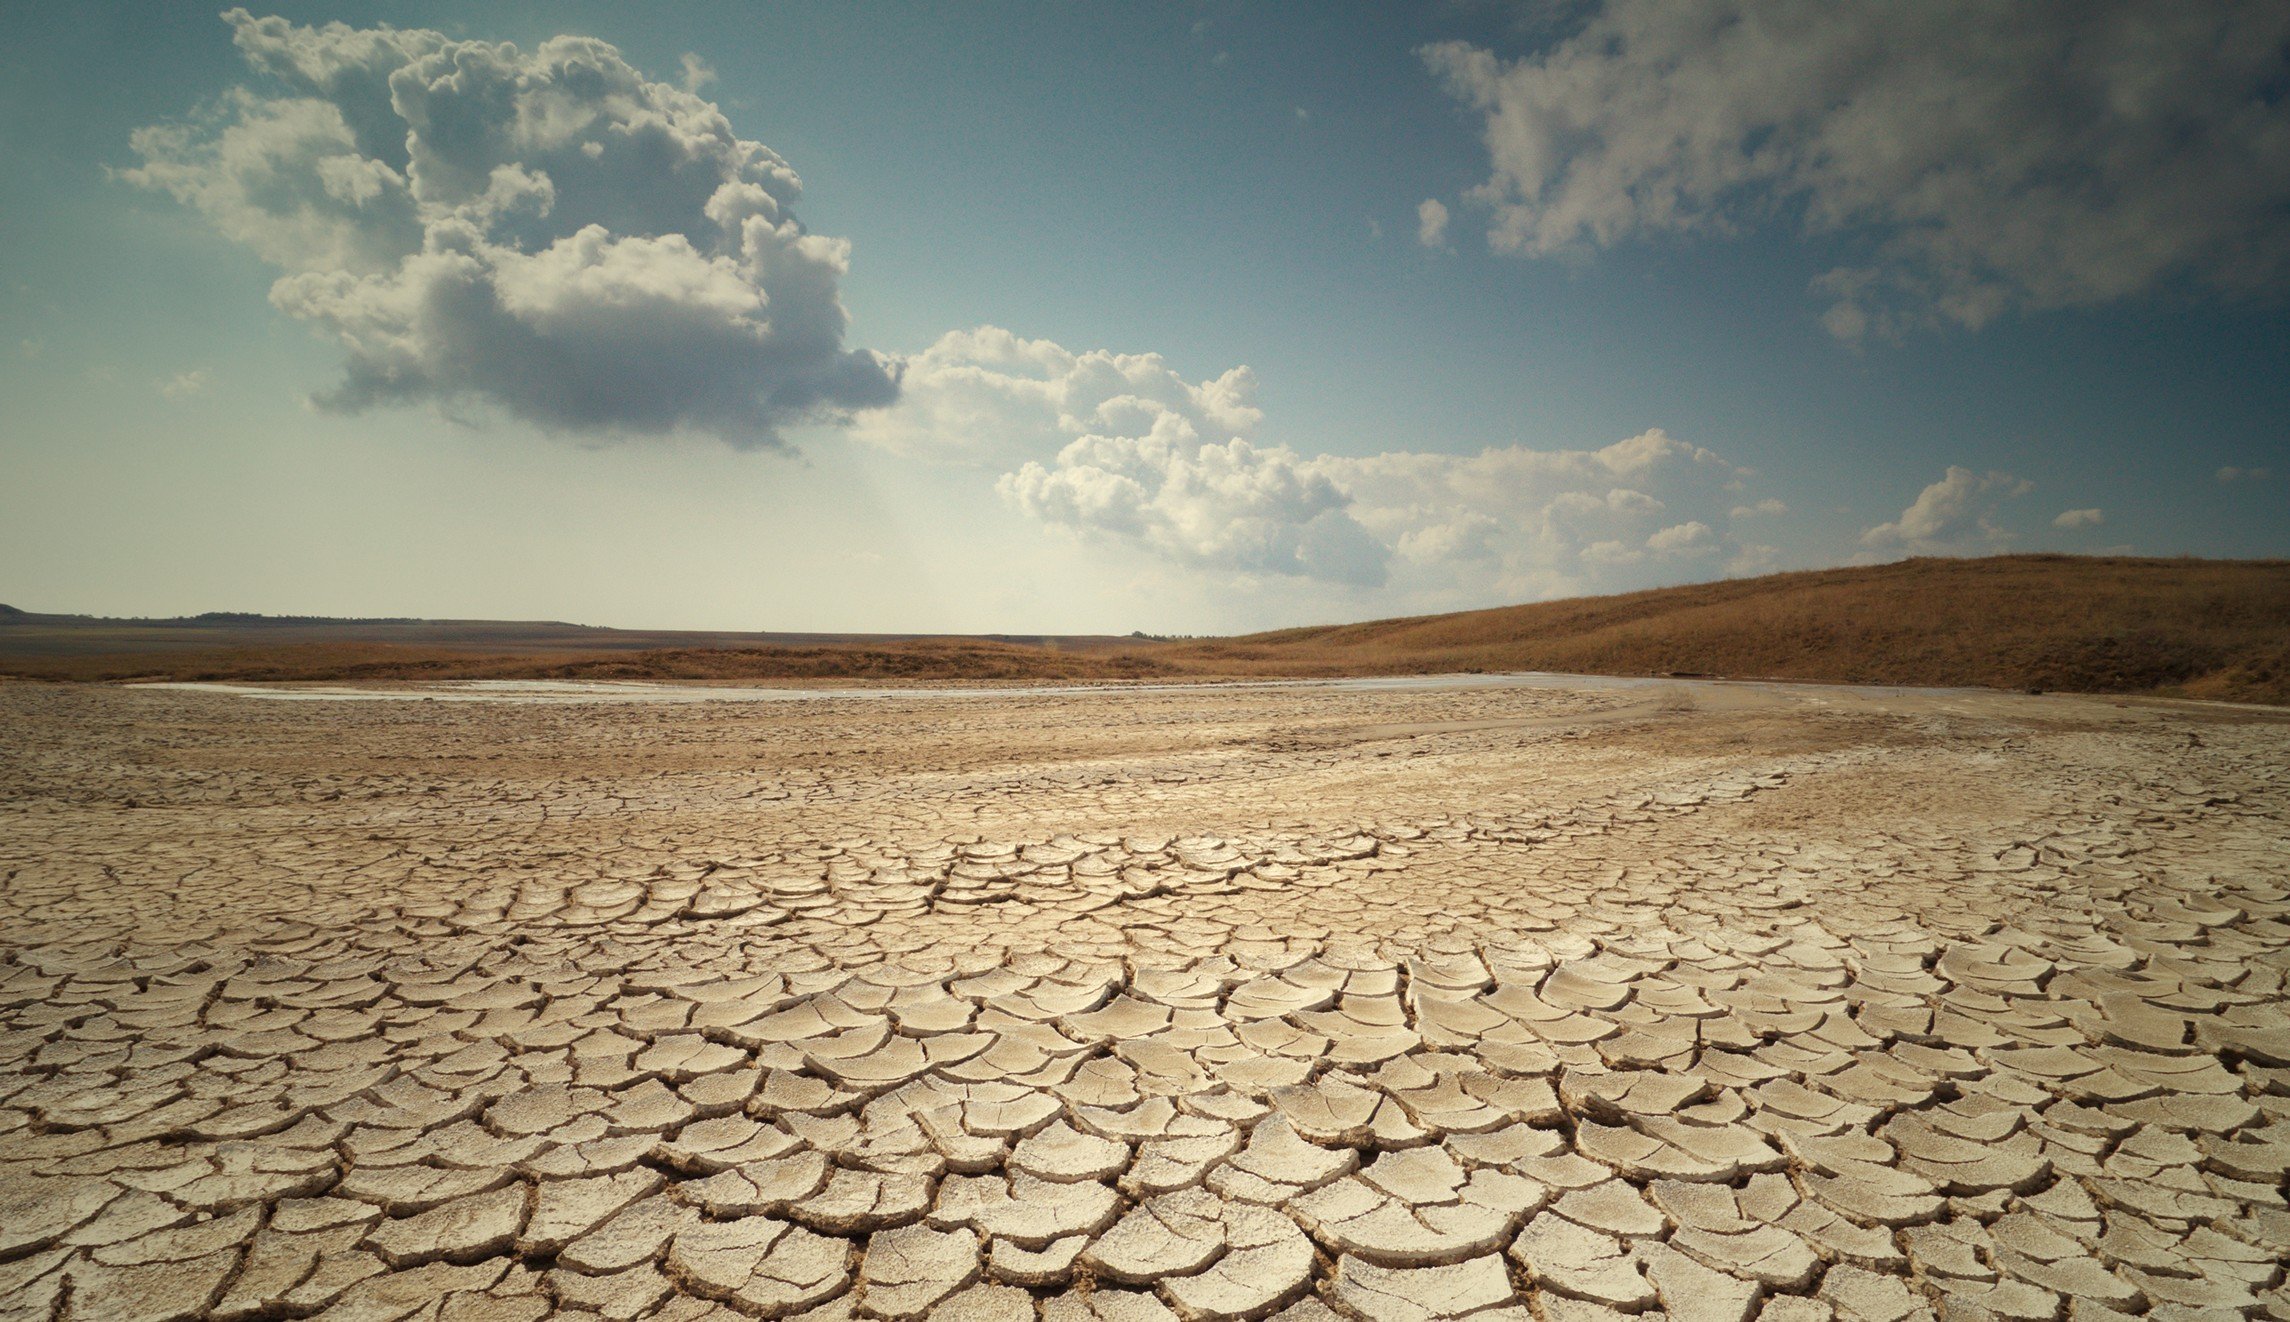 More information about "Η ερημοποίηση πλήττει τον πλανήτη με ταχύτατους ρυθμούς"